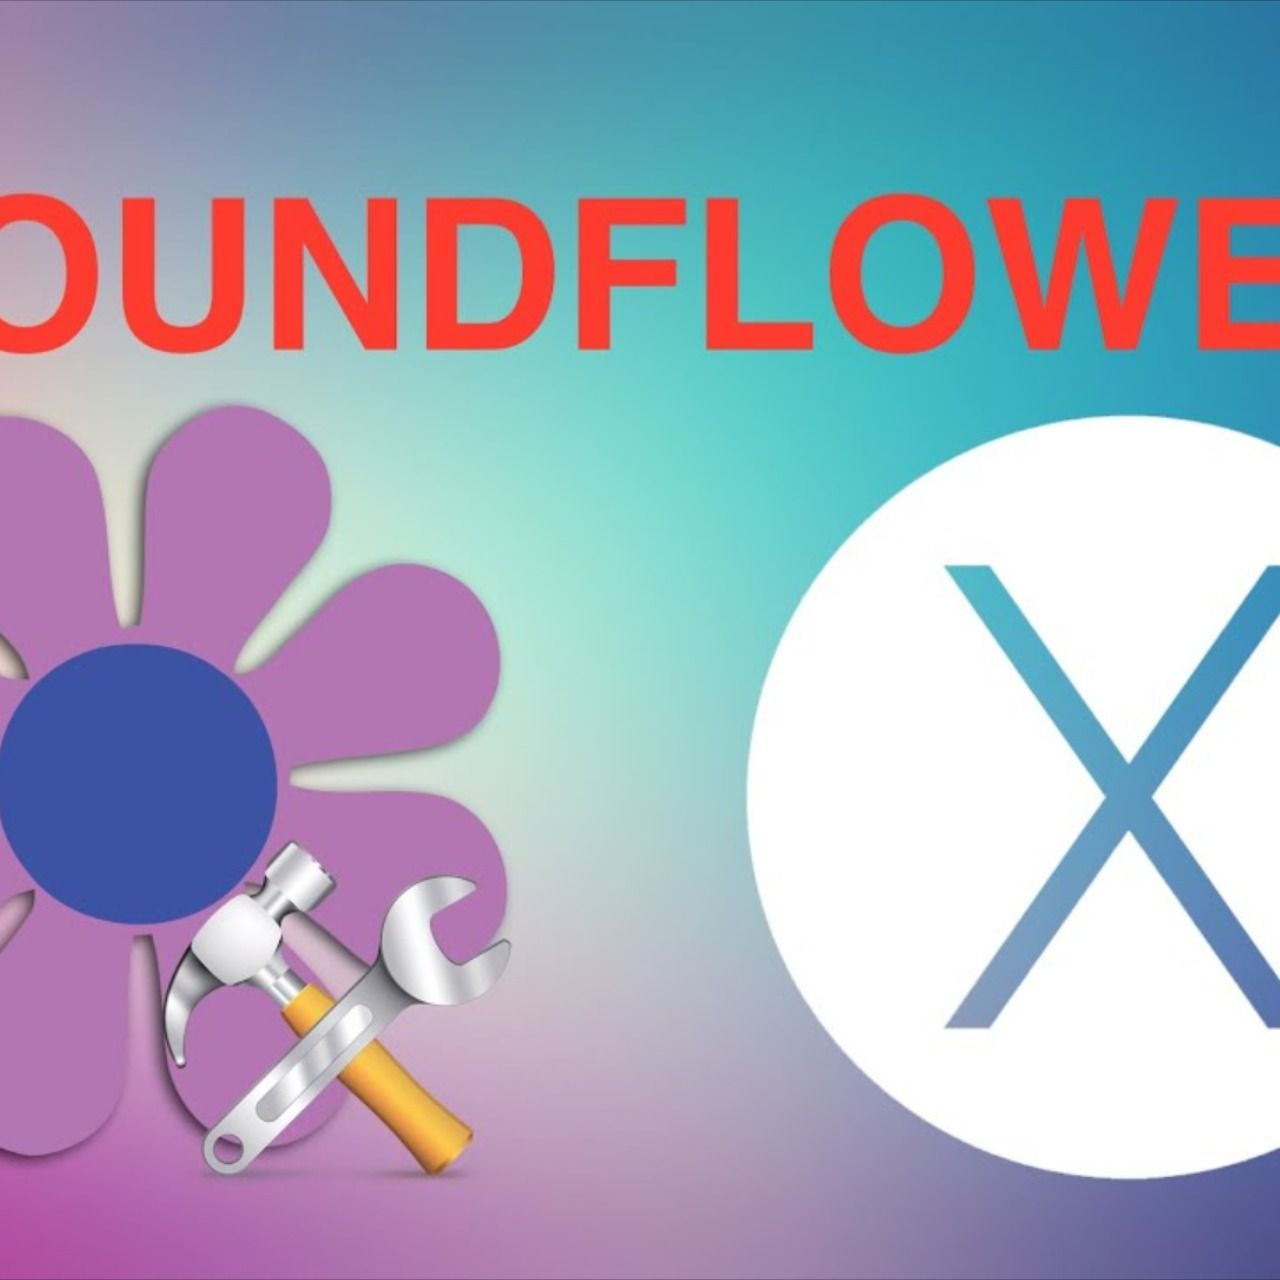 soundflower download mac